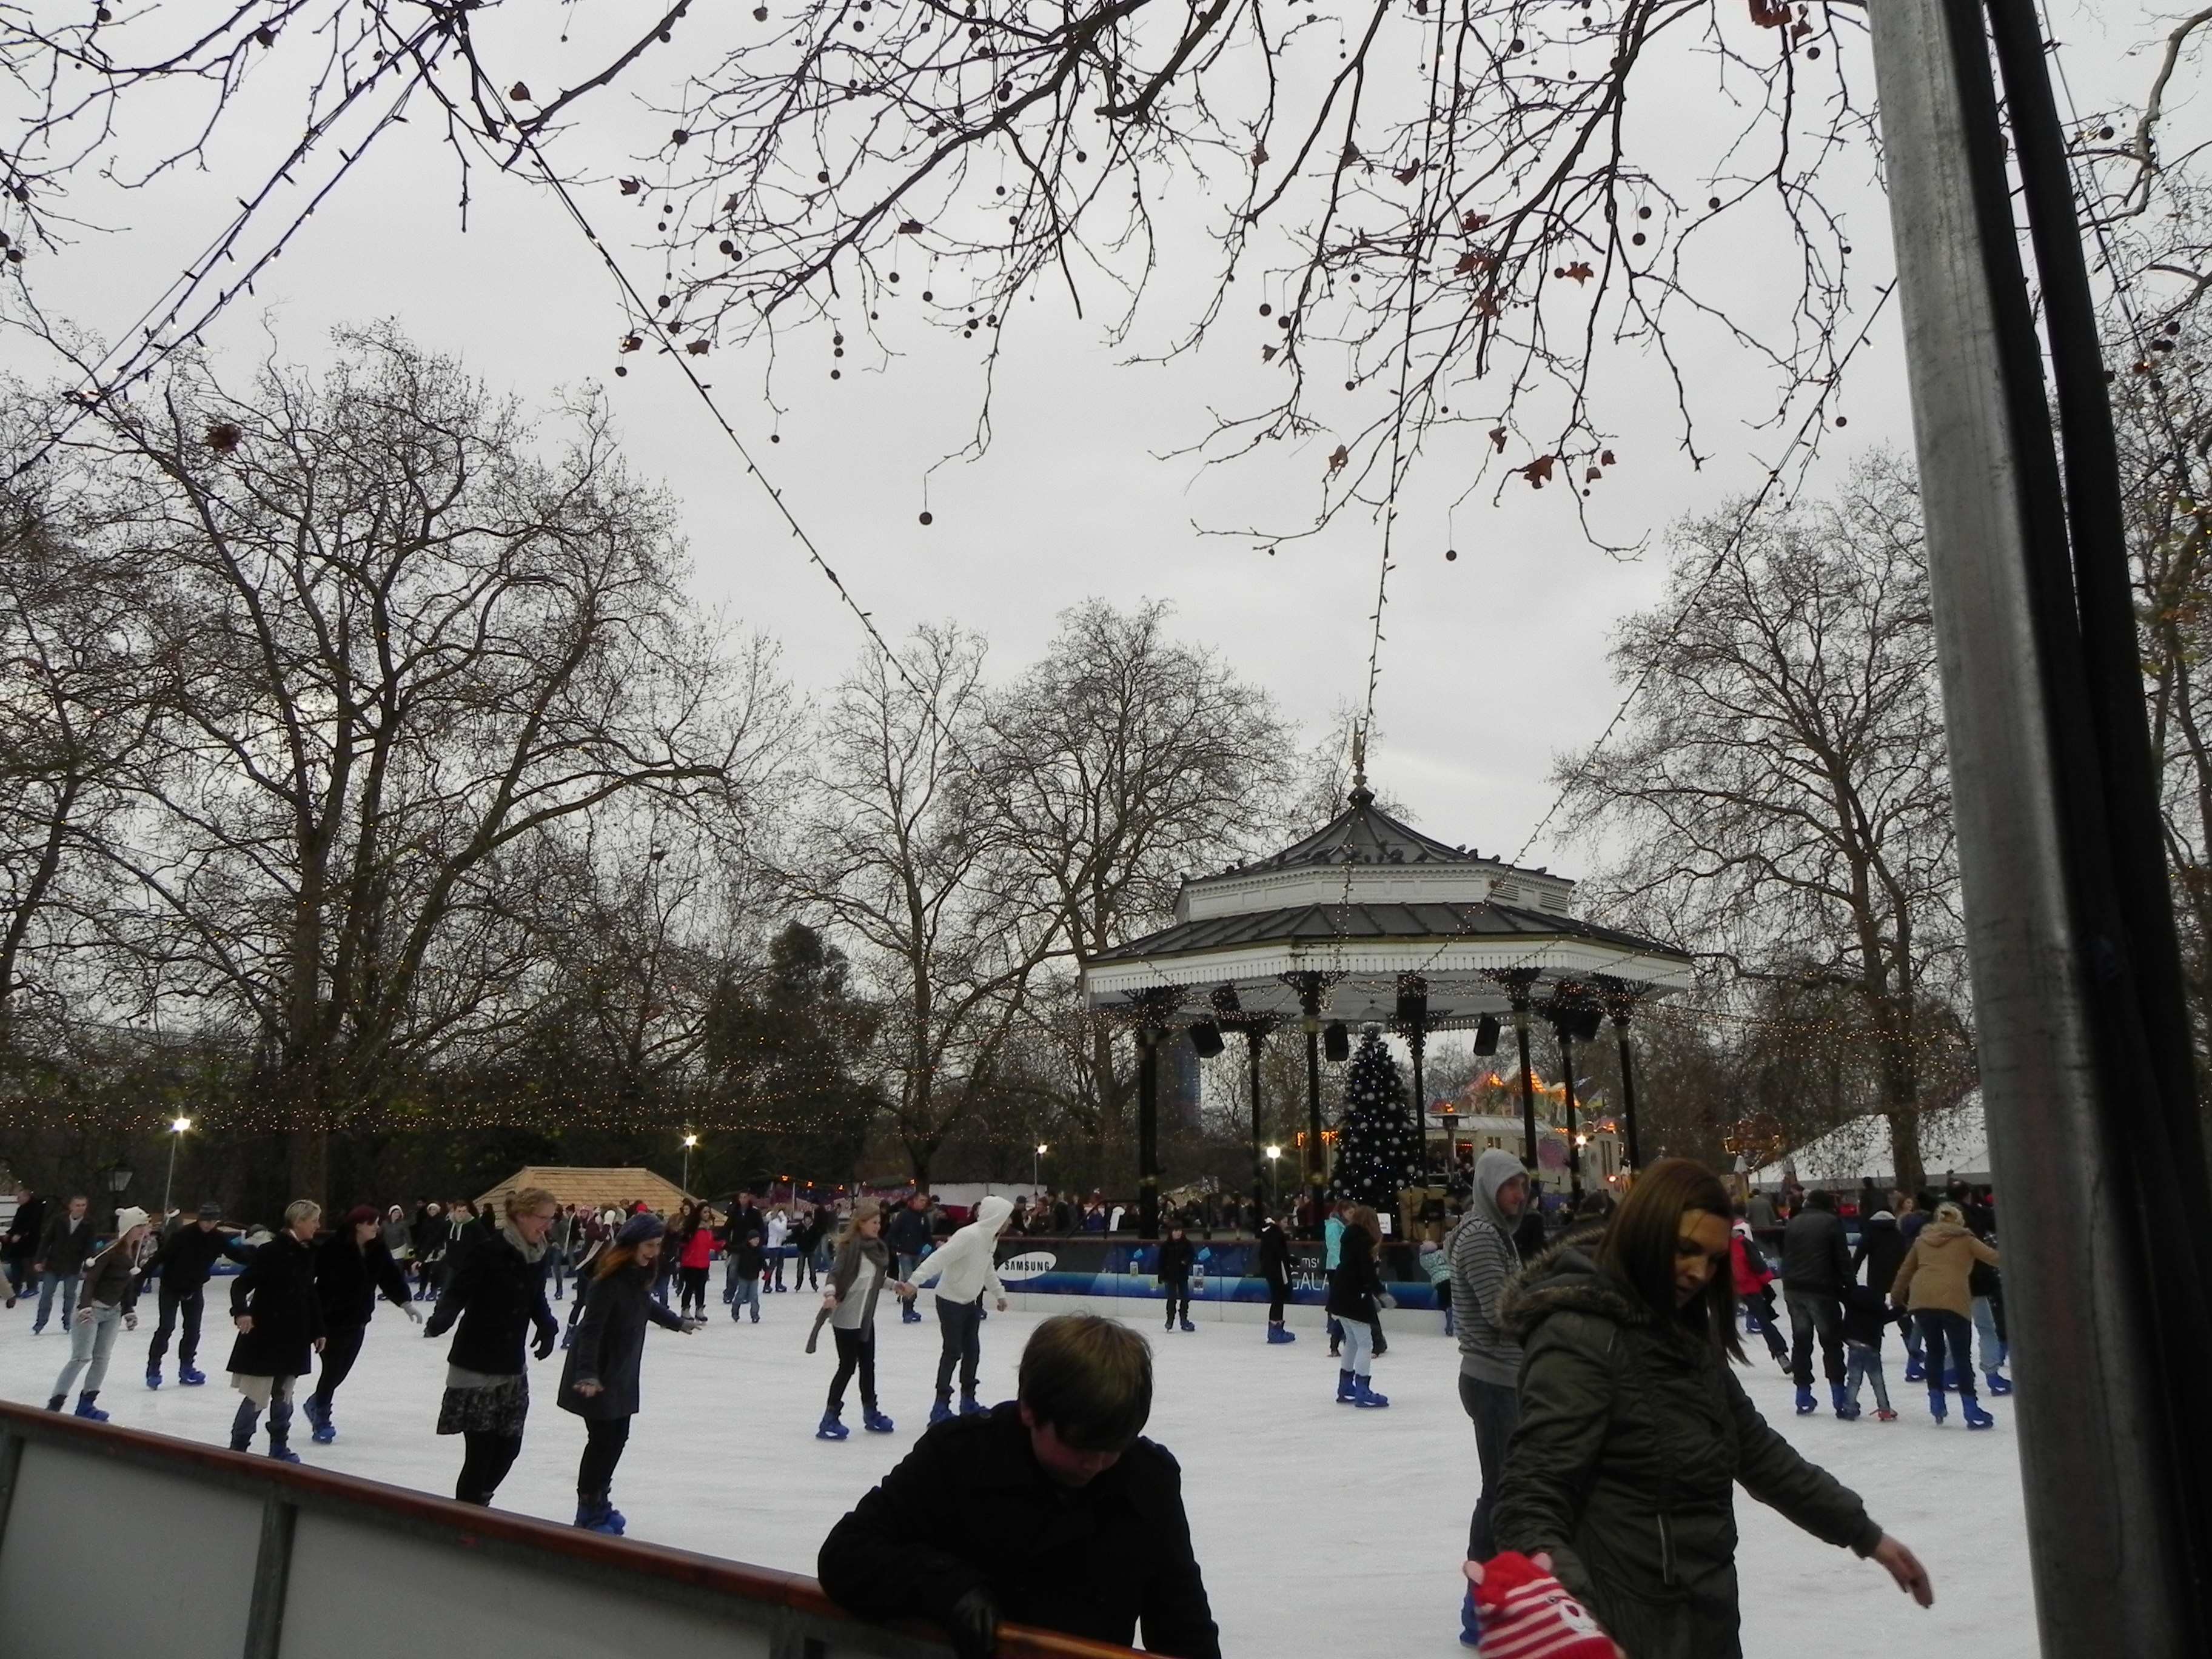 Festive Fun at Hyde Park Winter Wonderland